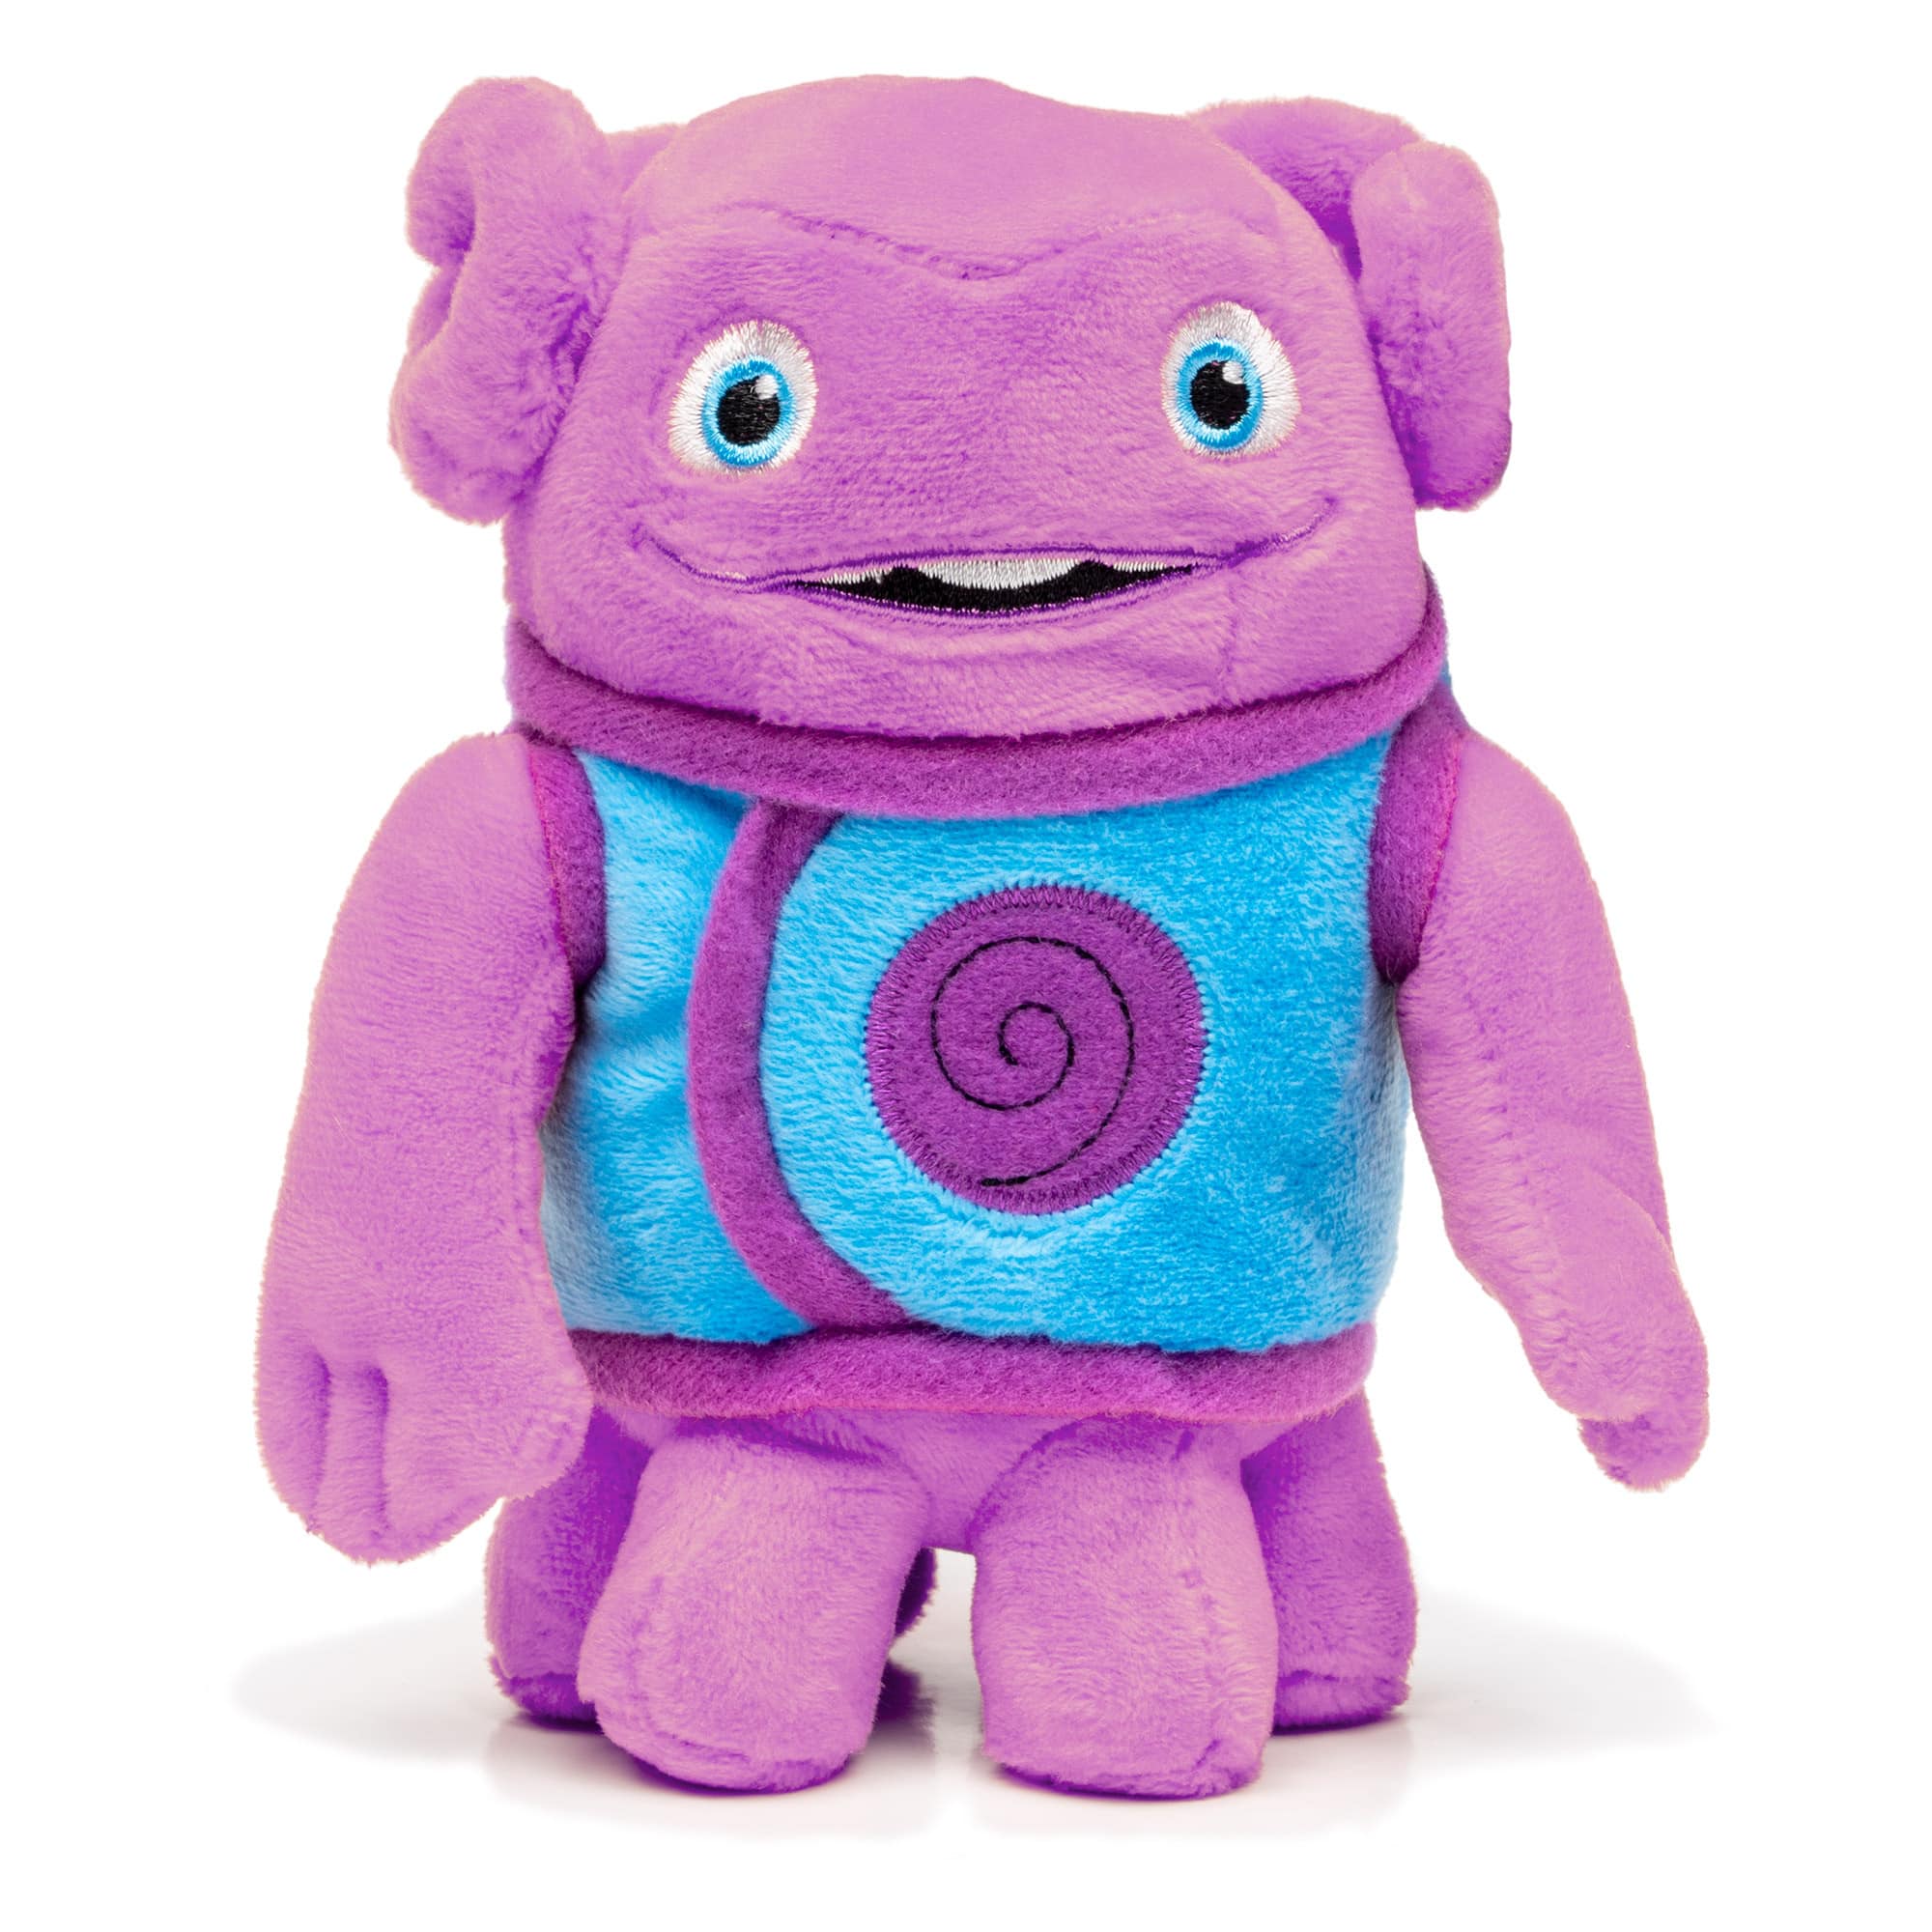 DreamWorks Home - Purple Oh 6-Inch Plush